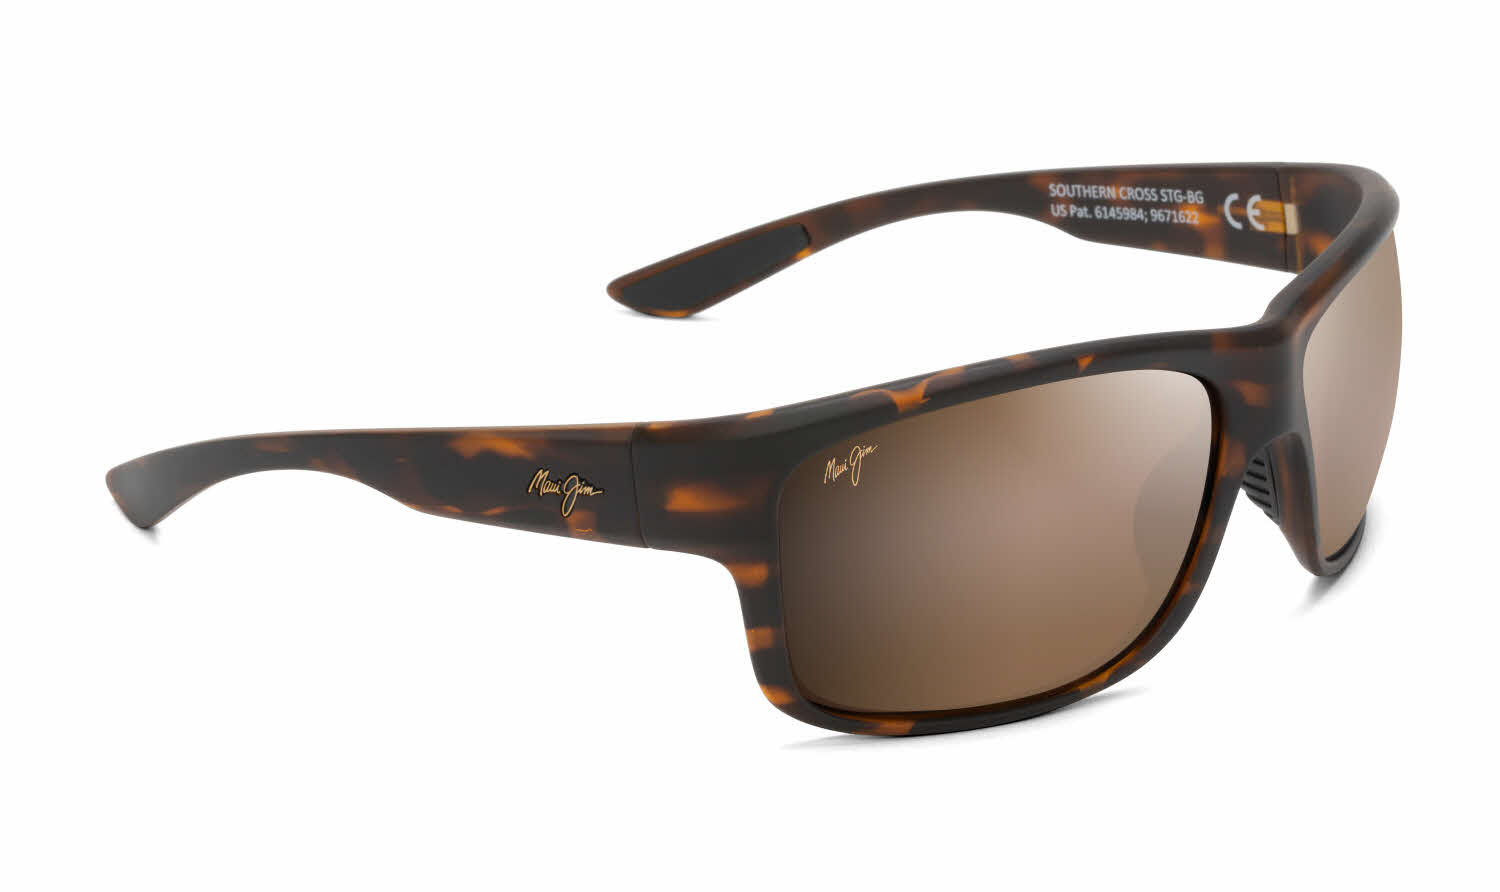 Maui Jim Southern Cross-815 Sunglasses